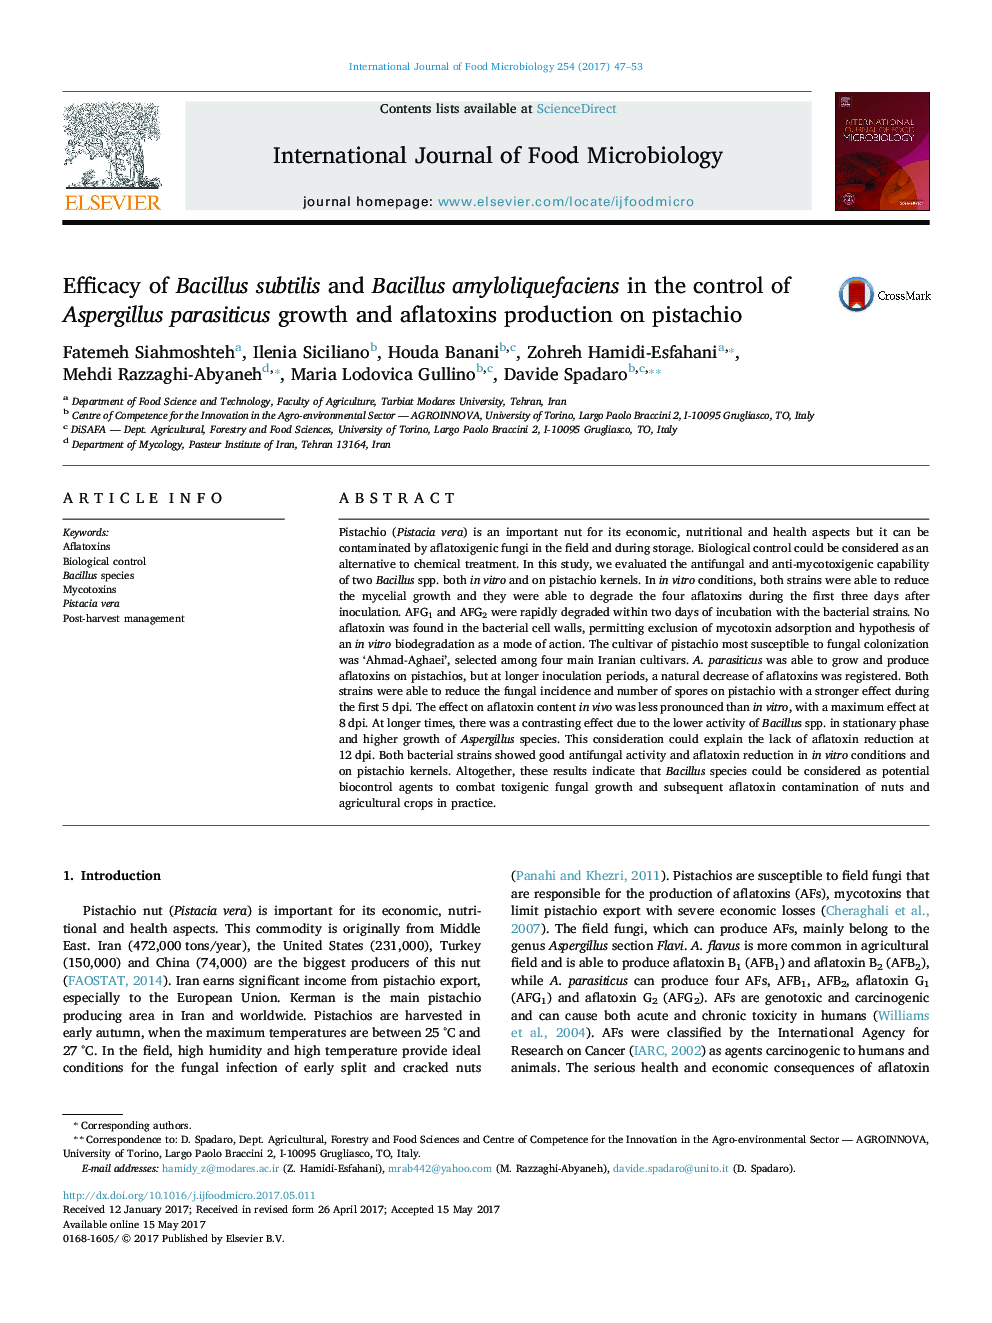 Efficacy of Bacillus subtilis and Bacillus amyloliquefaciens in the control of Aspergillus parasiticus growth and aflatoxins production on pistachio